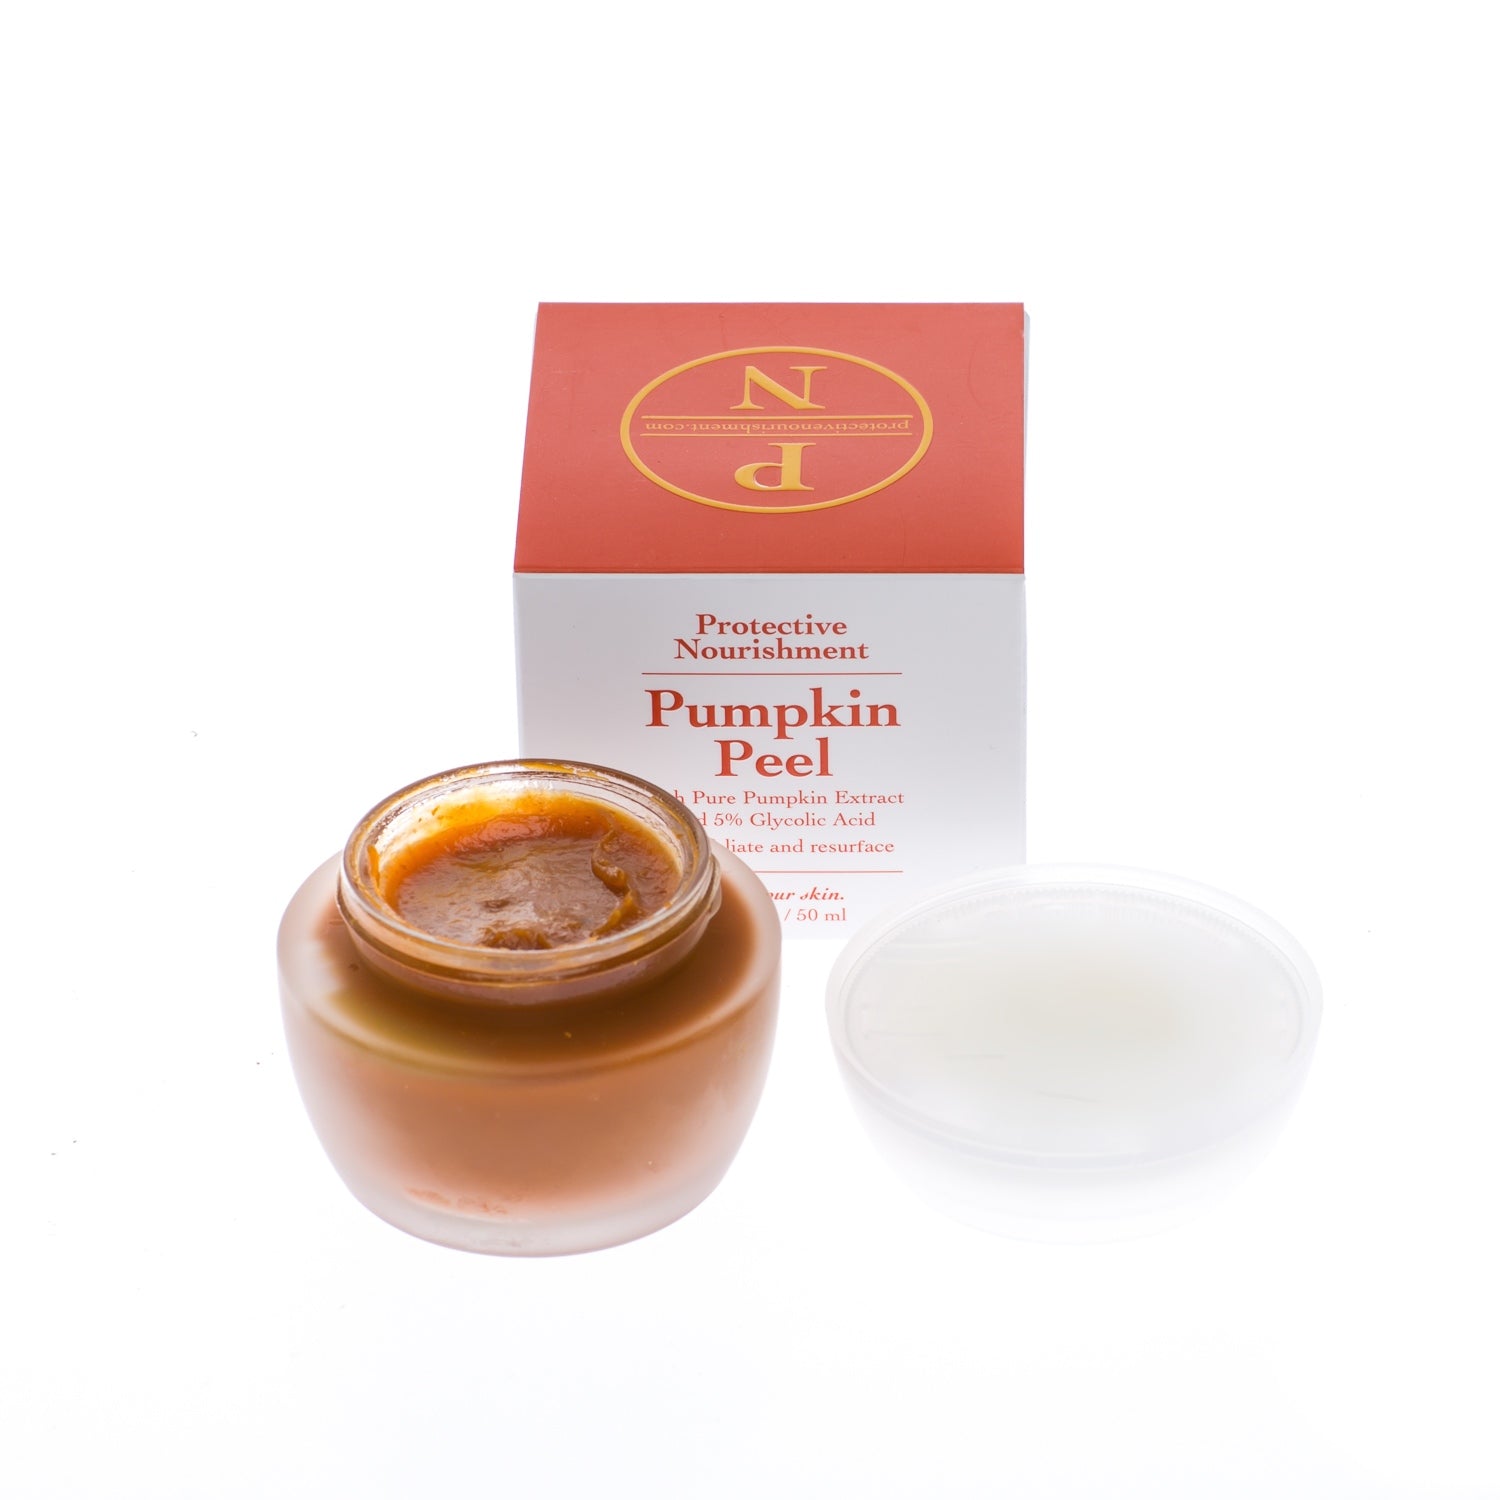 Pumpkin Peel - Protective Nourishment